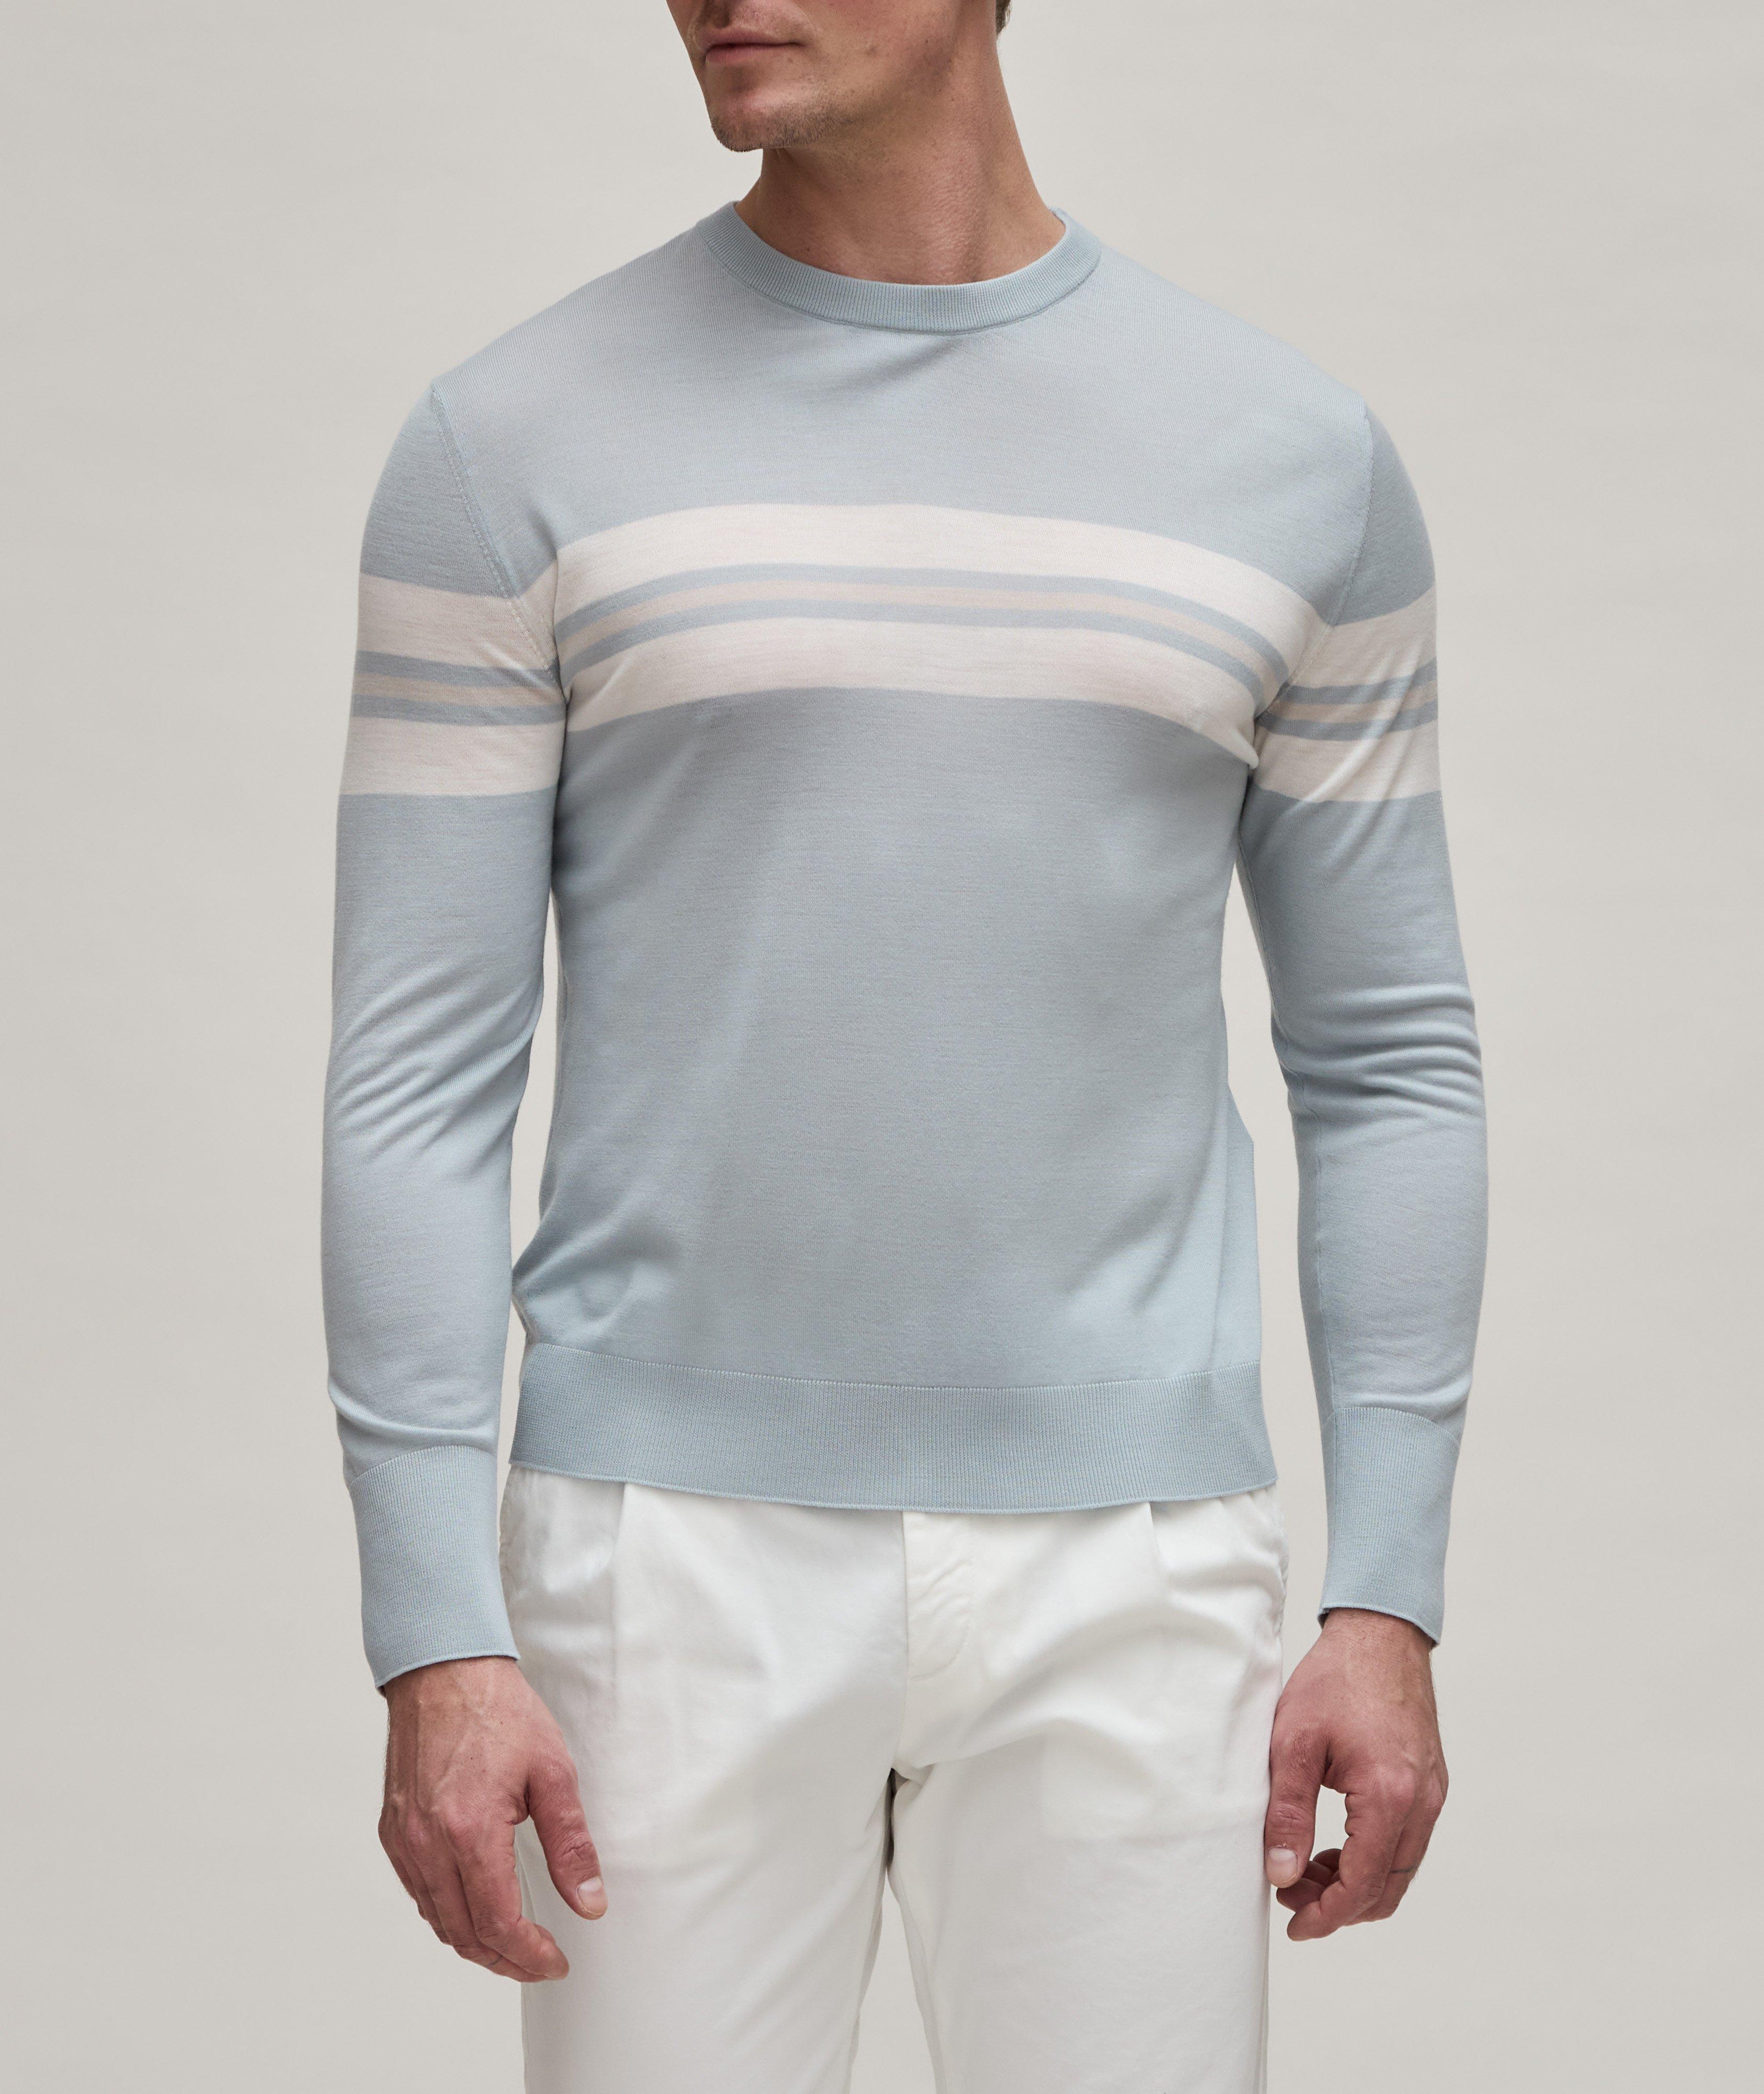 Striped Wool Sweater image 1